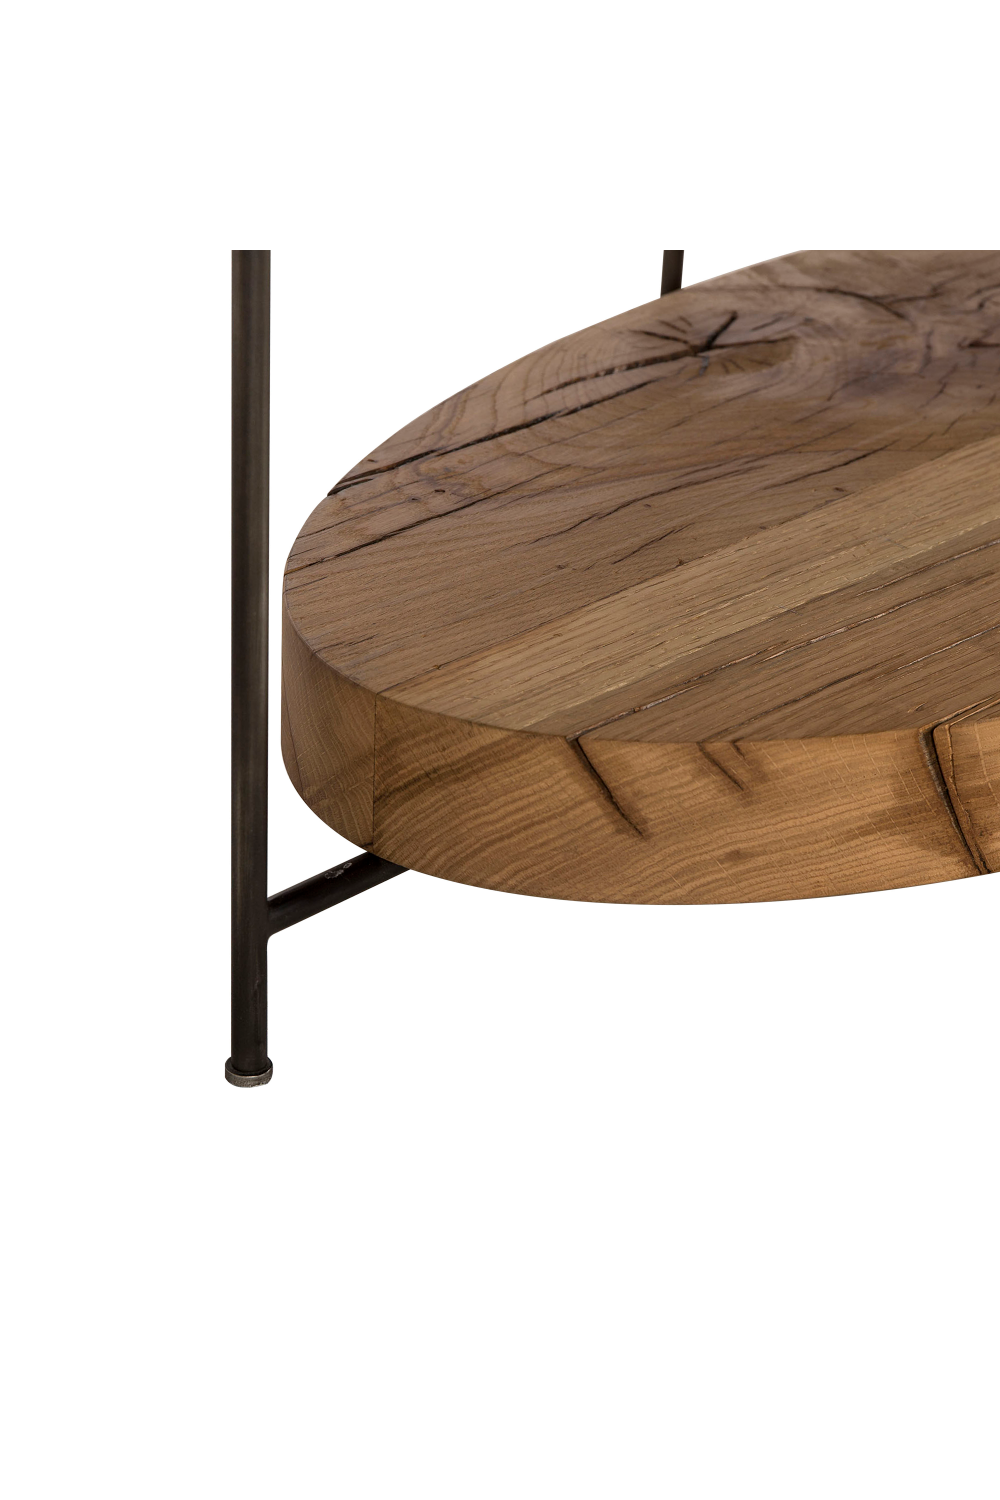 Black Marble Oval Coffee Table | Andrew Martin Olivia | OROA